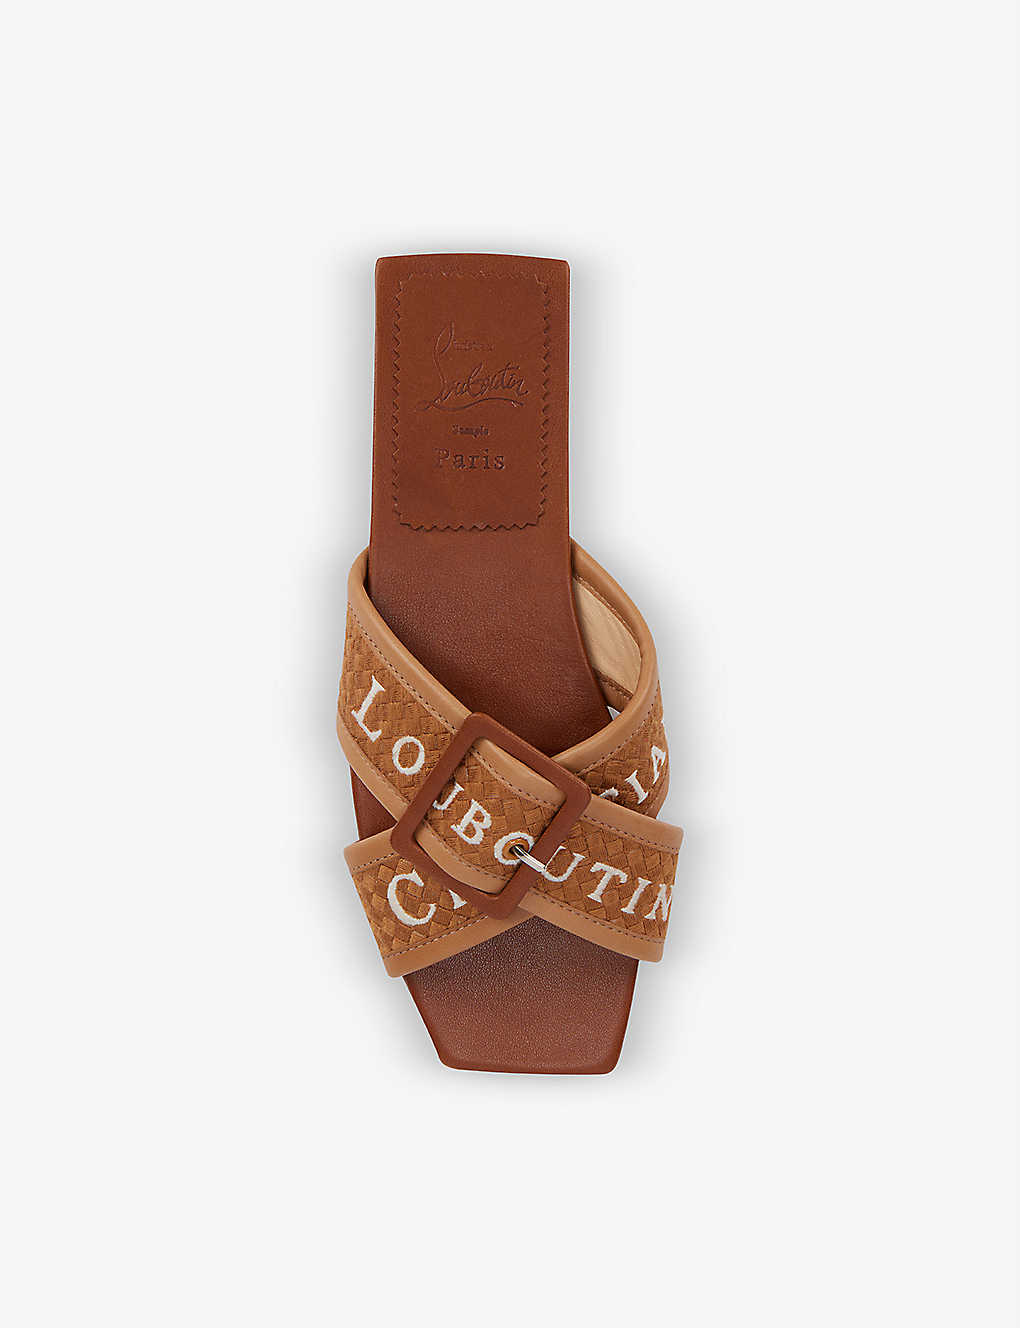 CHRISTIAN LOUBOUTIN - Crossimule leather sandals | Selfridges.com